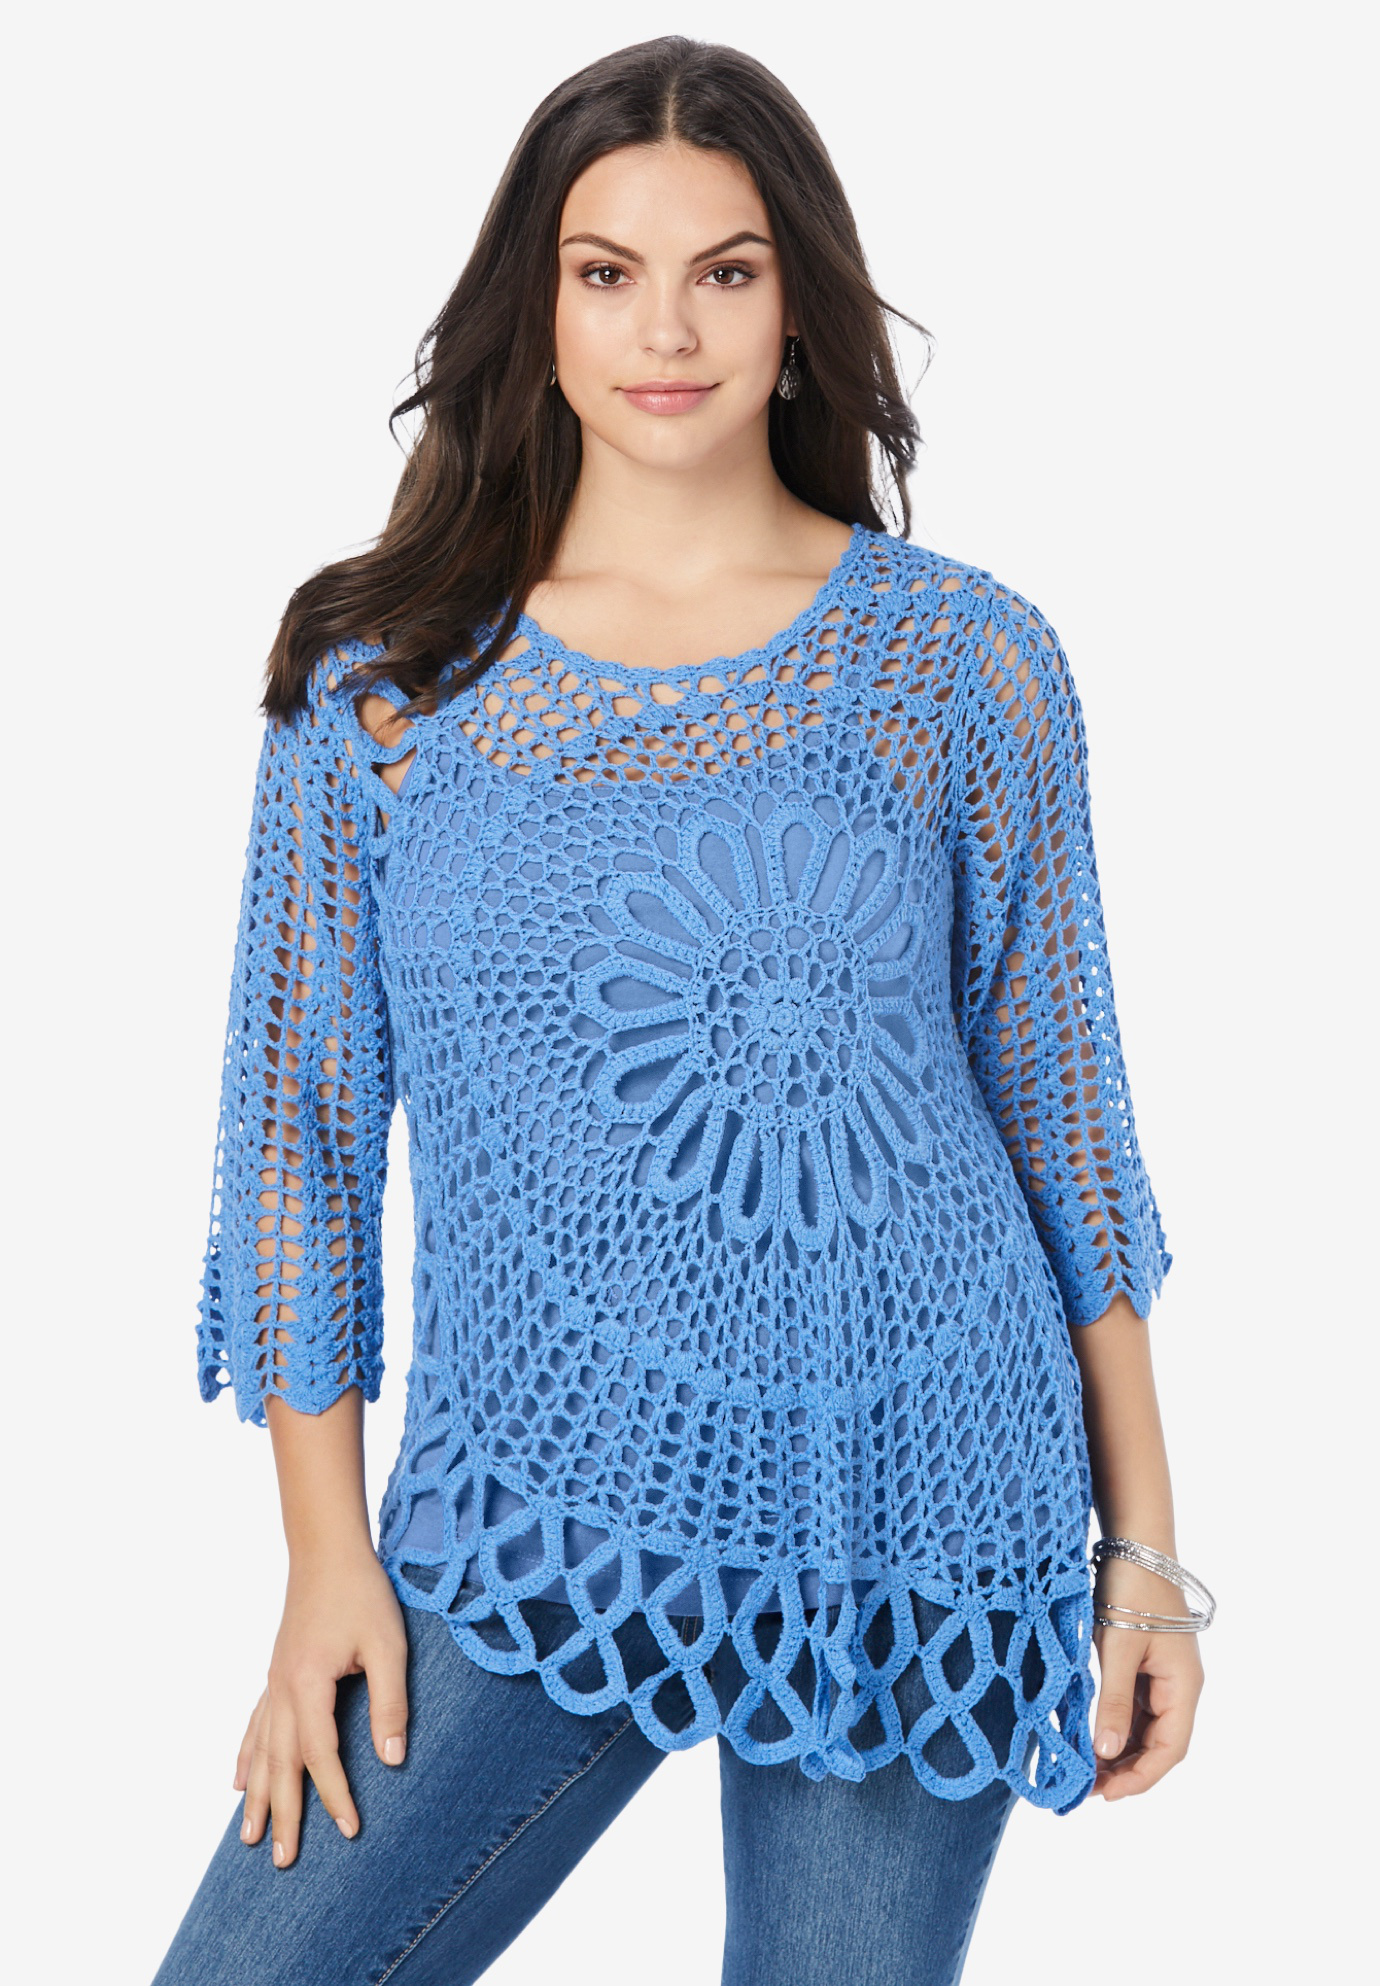 Starburst Crochet Sweater